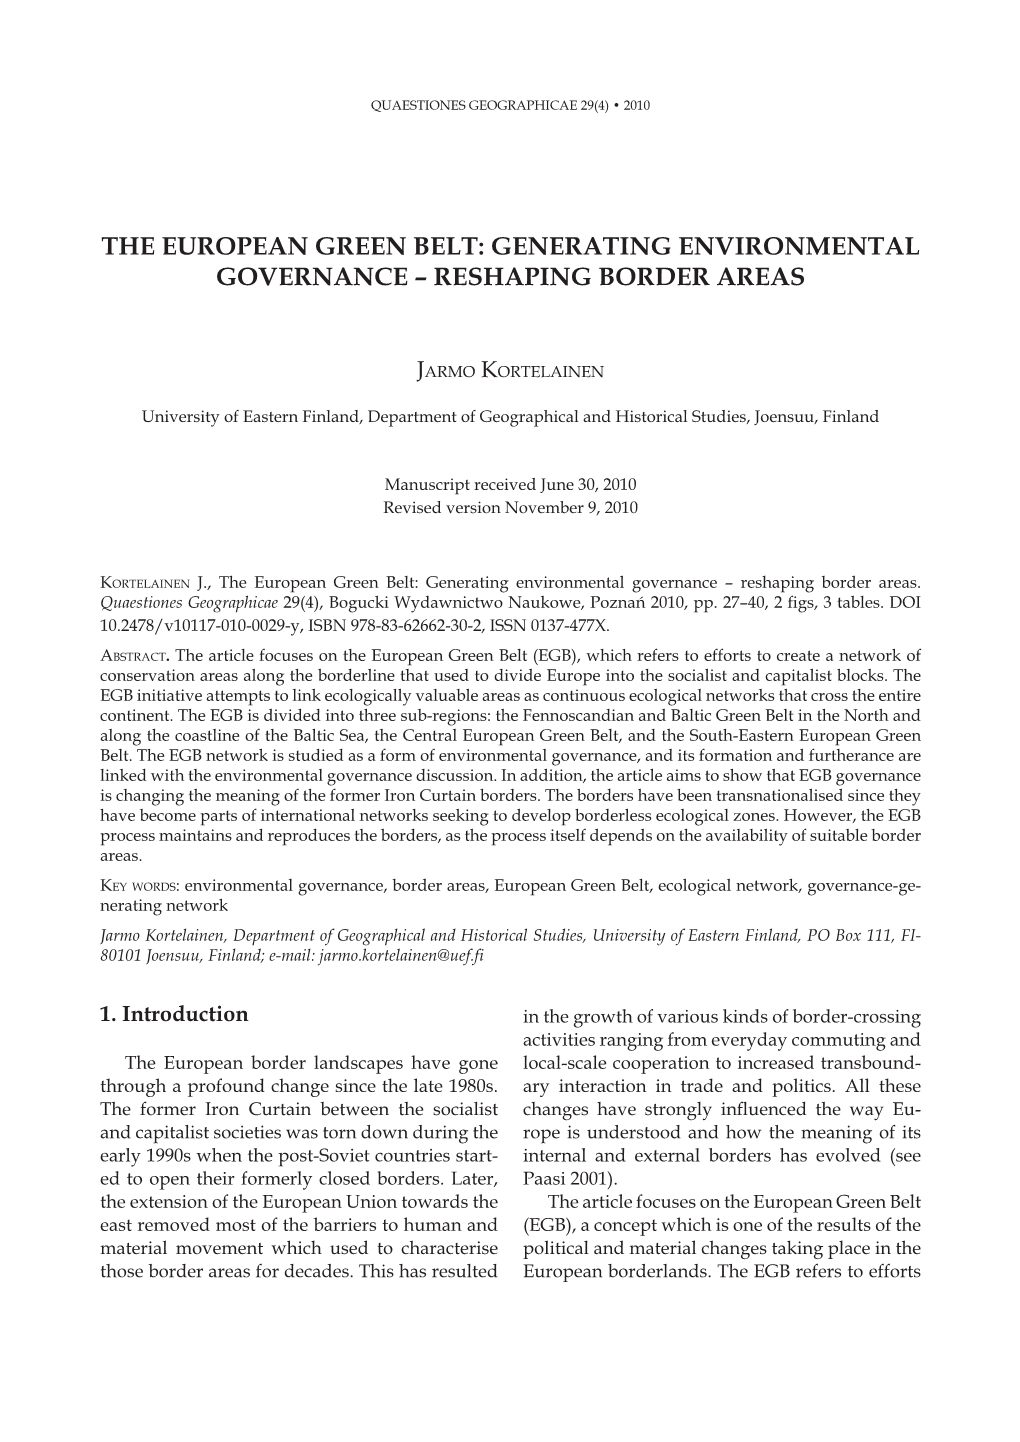 The European Green Belt: Generating Environmental Governance – Reshaping Border Areas